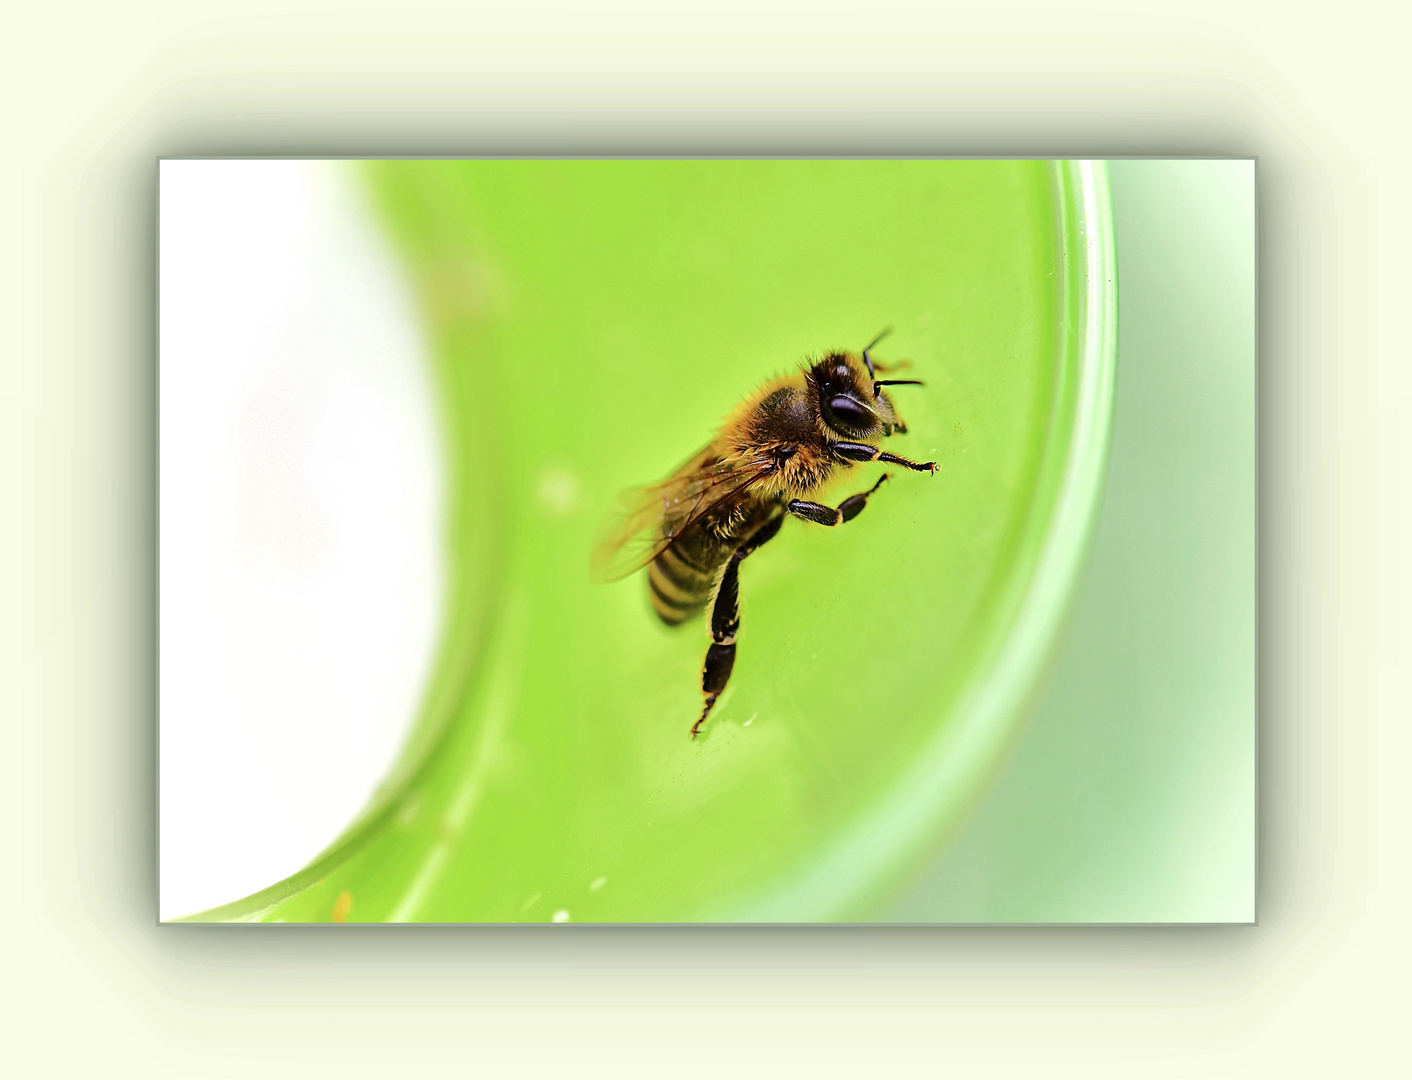 Biene im grünen Glas